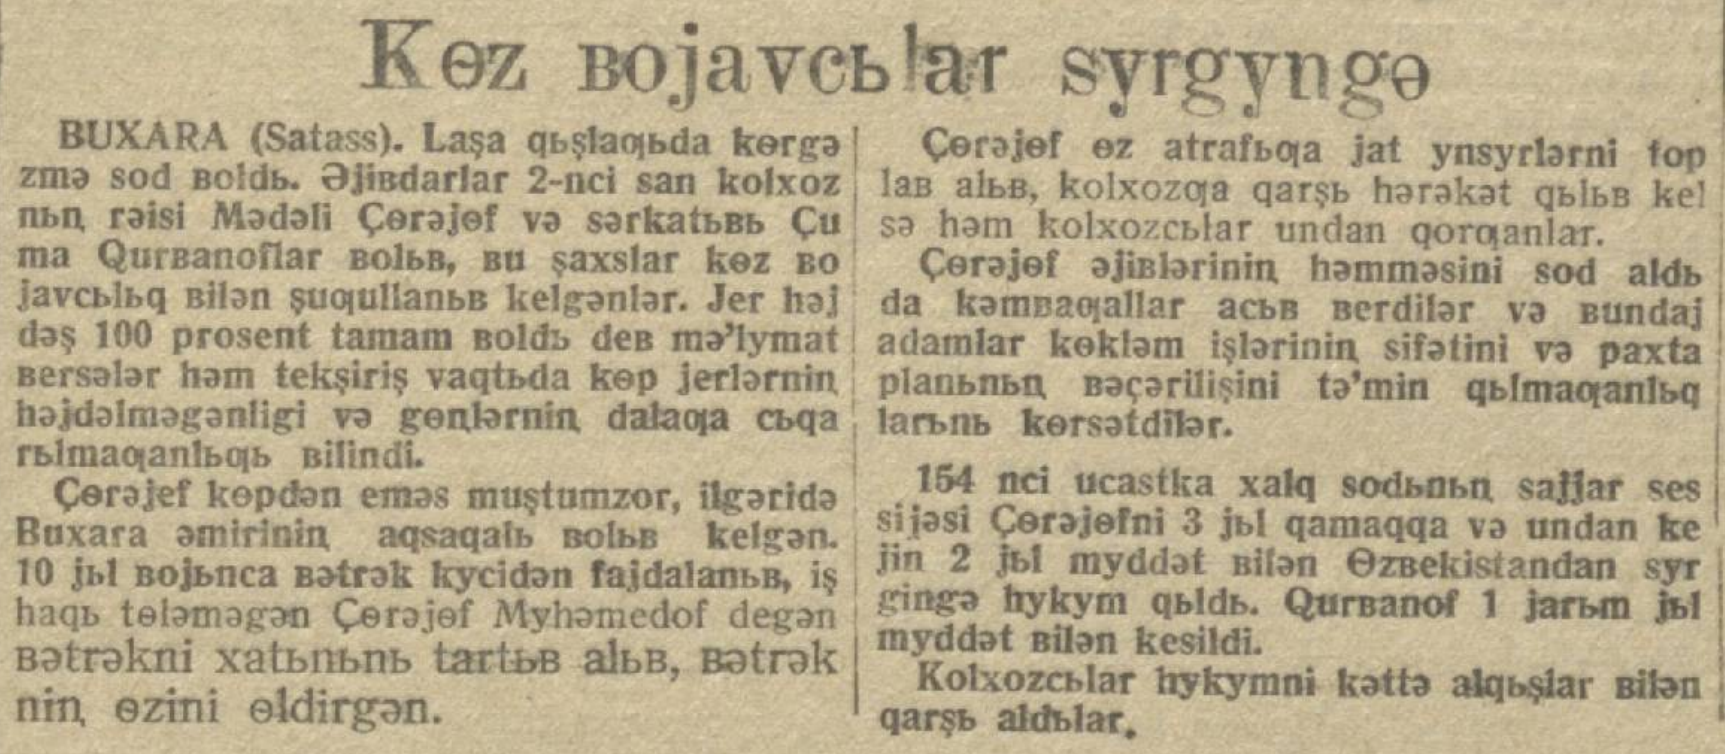 «Қизил Ўзбекистон» газетасининг 1932 йил 23 апрель сонидан лавҳа